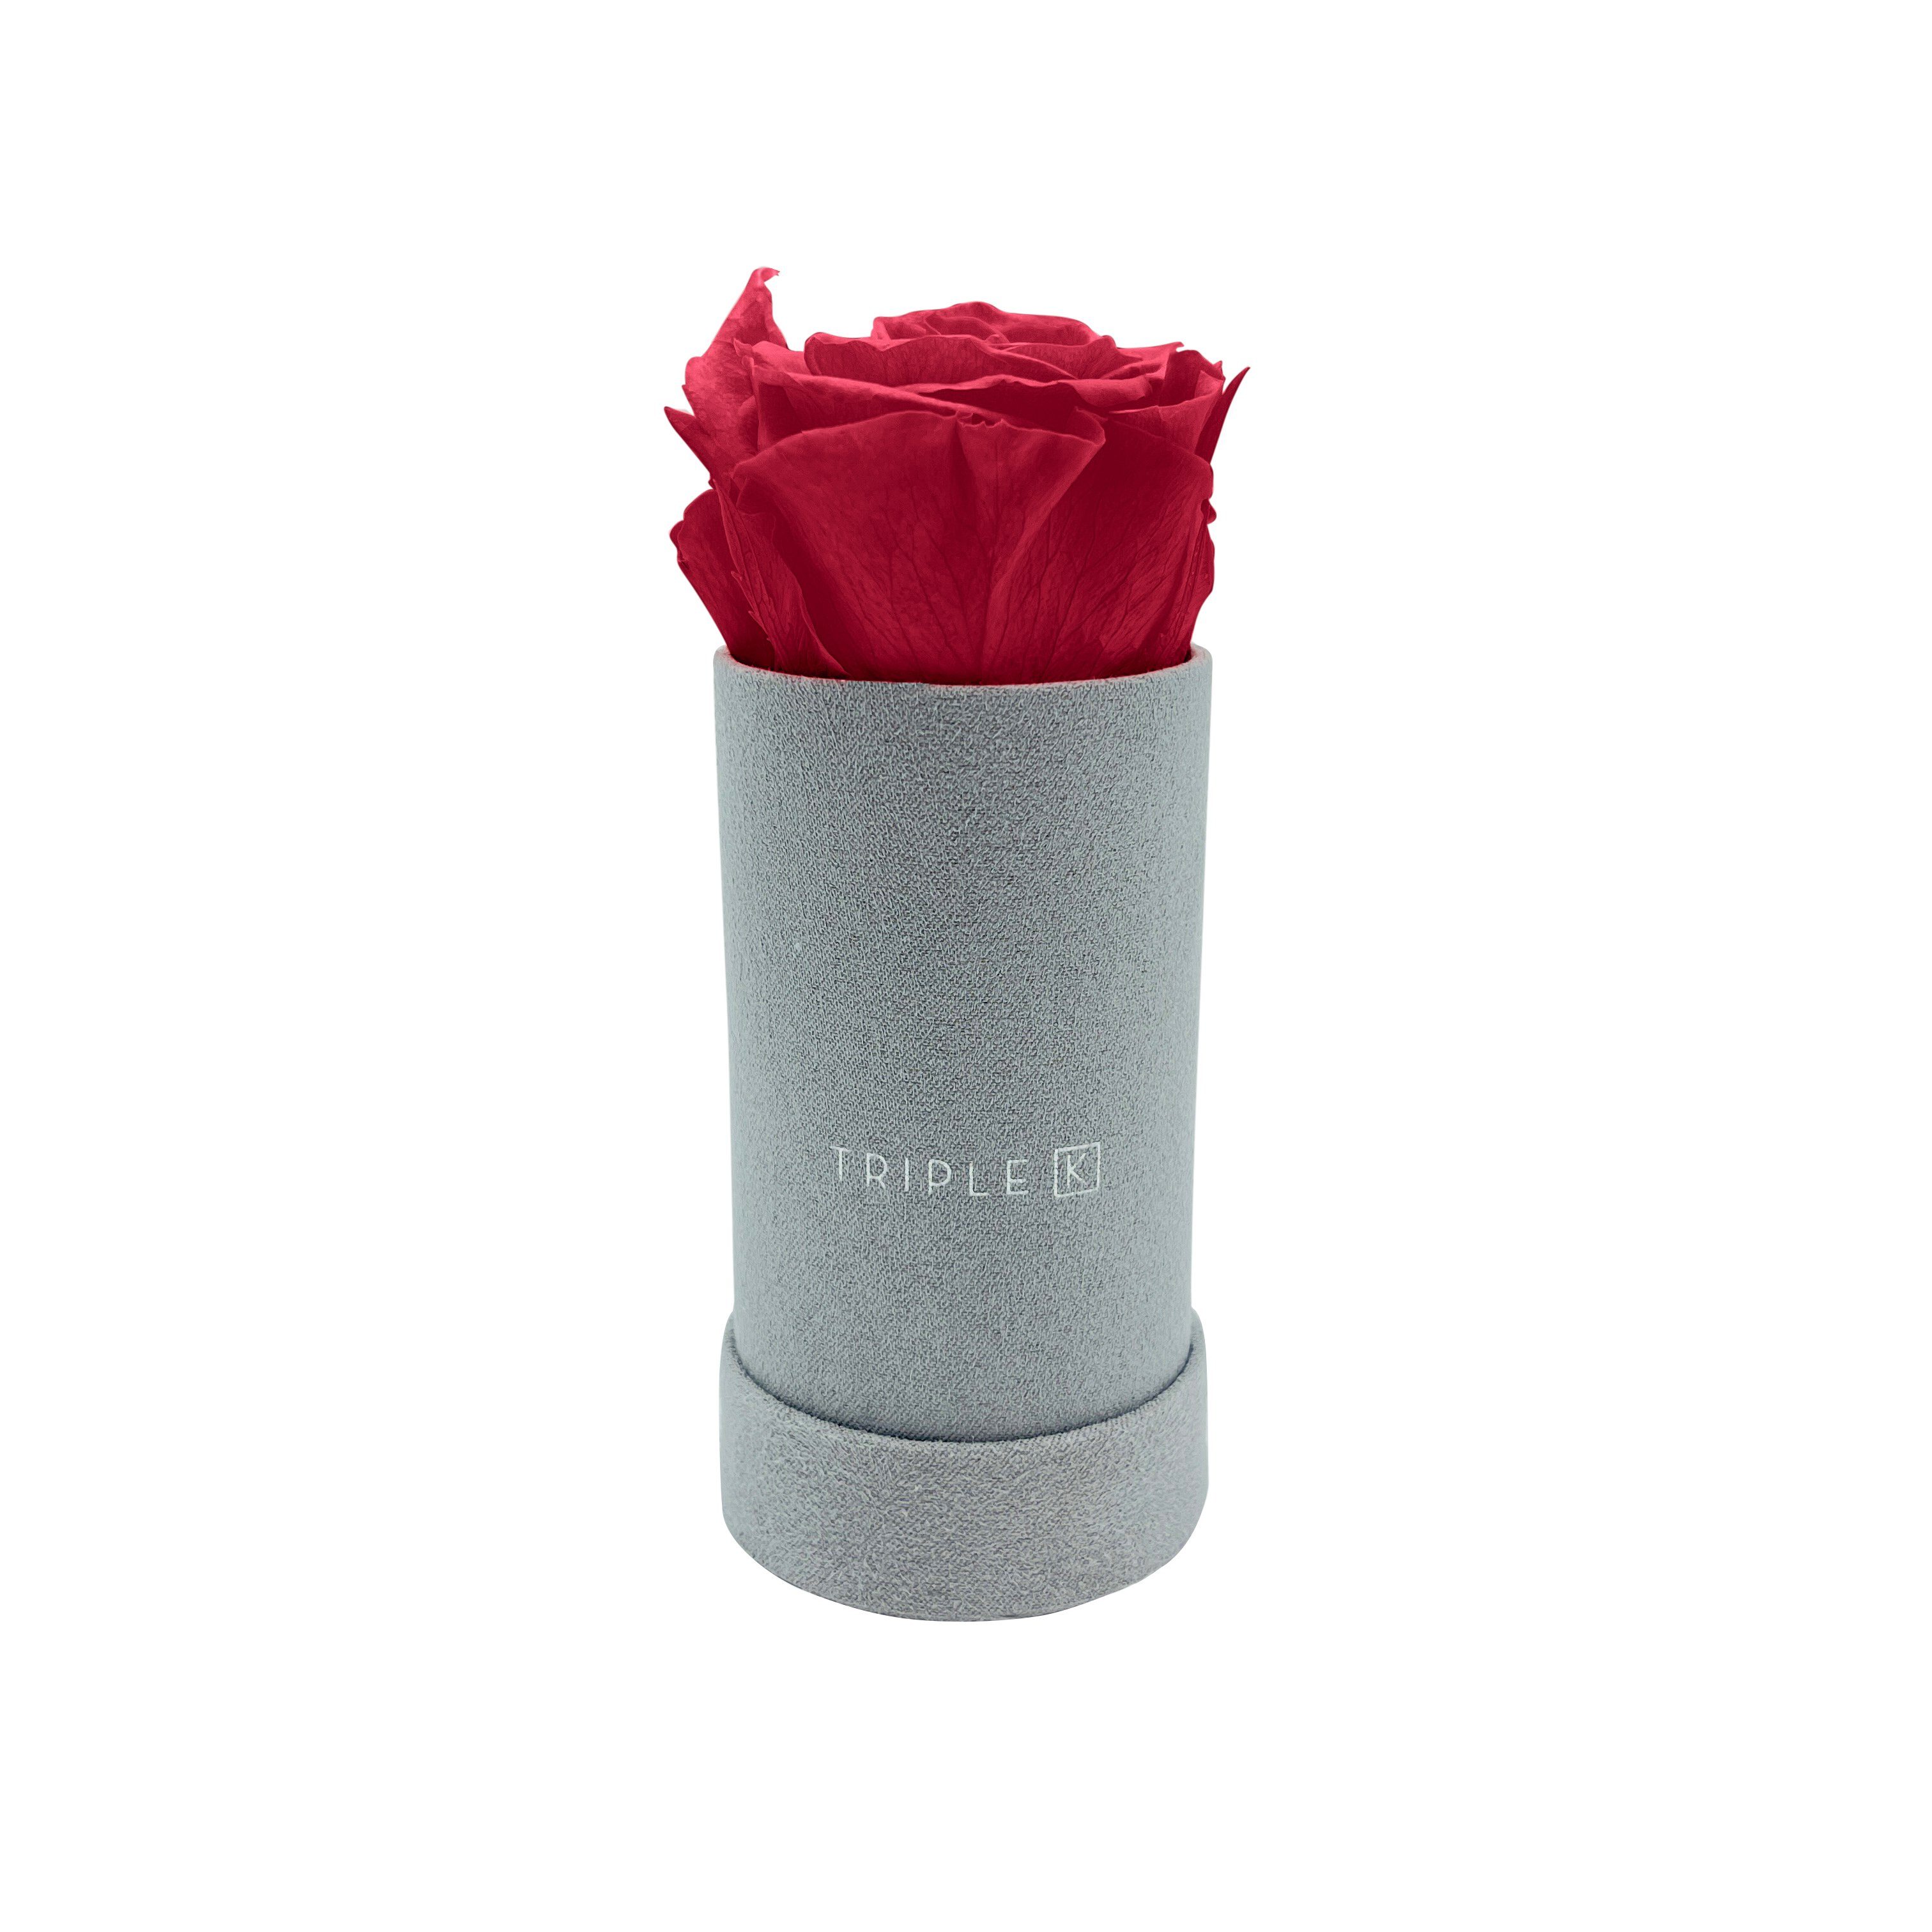 Kunstblume TRIPLE K - Rosenbox Velvet mit Infinity Rosen, bis 3 Jahre Haltbar, Flowerbox mit konservierten Rosen, Blumenbox Inkl. Grußkarte Infinity Rose, TRIPLE K Rot